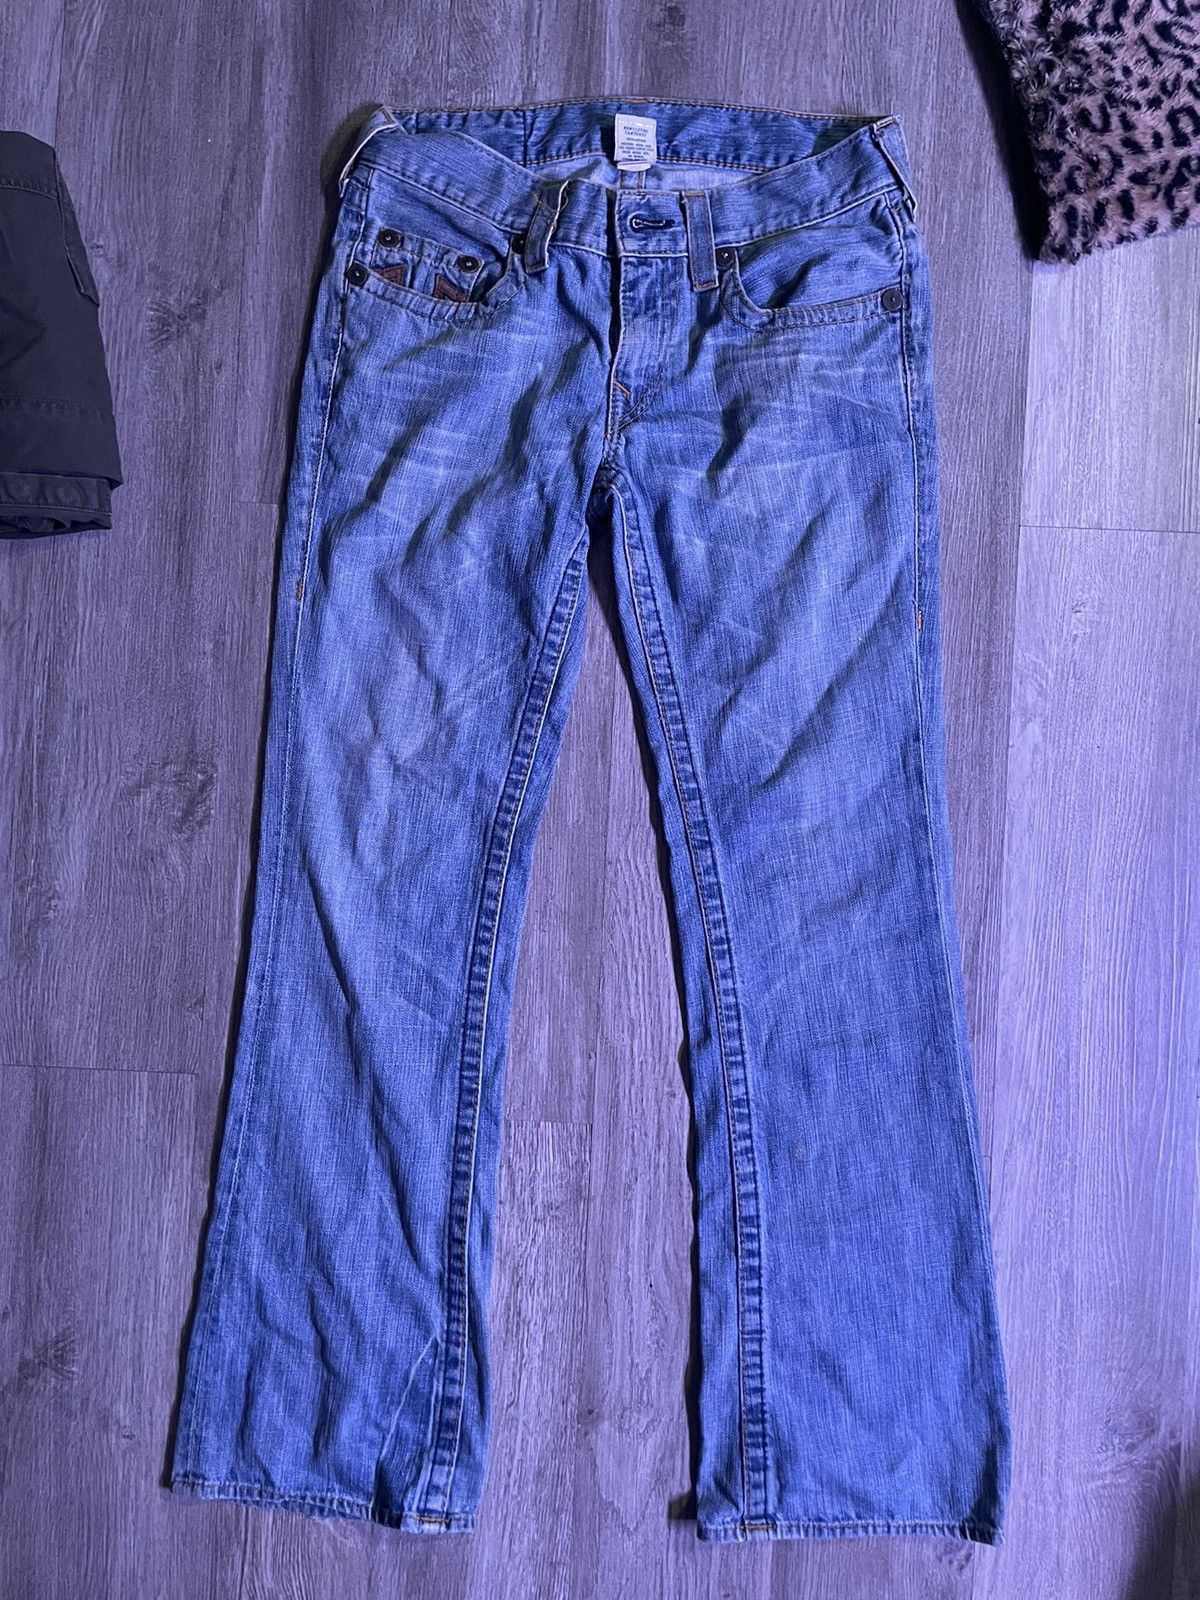 True Religion True Religion Brand Jeans Size US 31 - 2 Preview